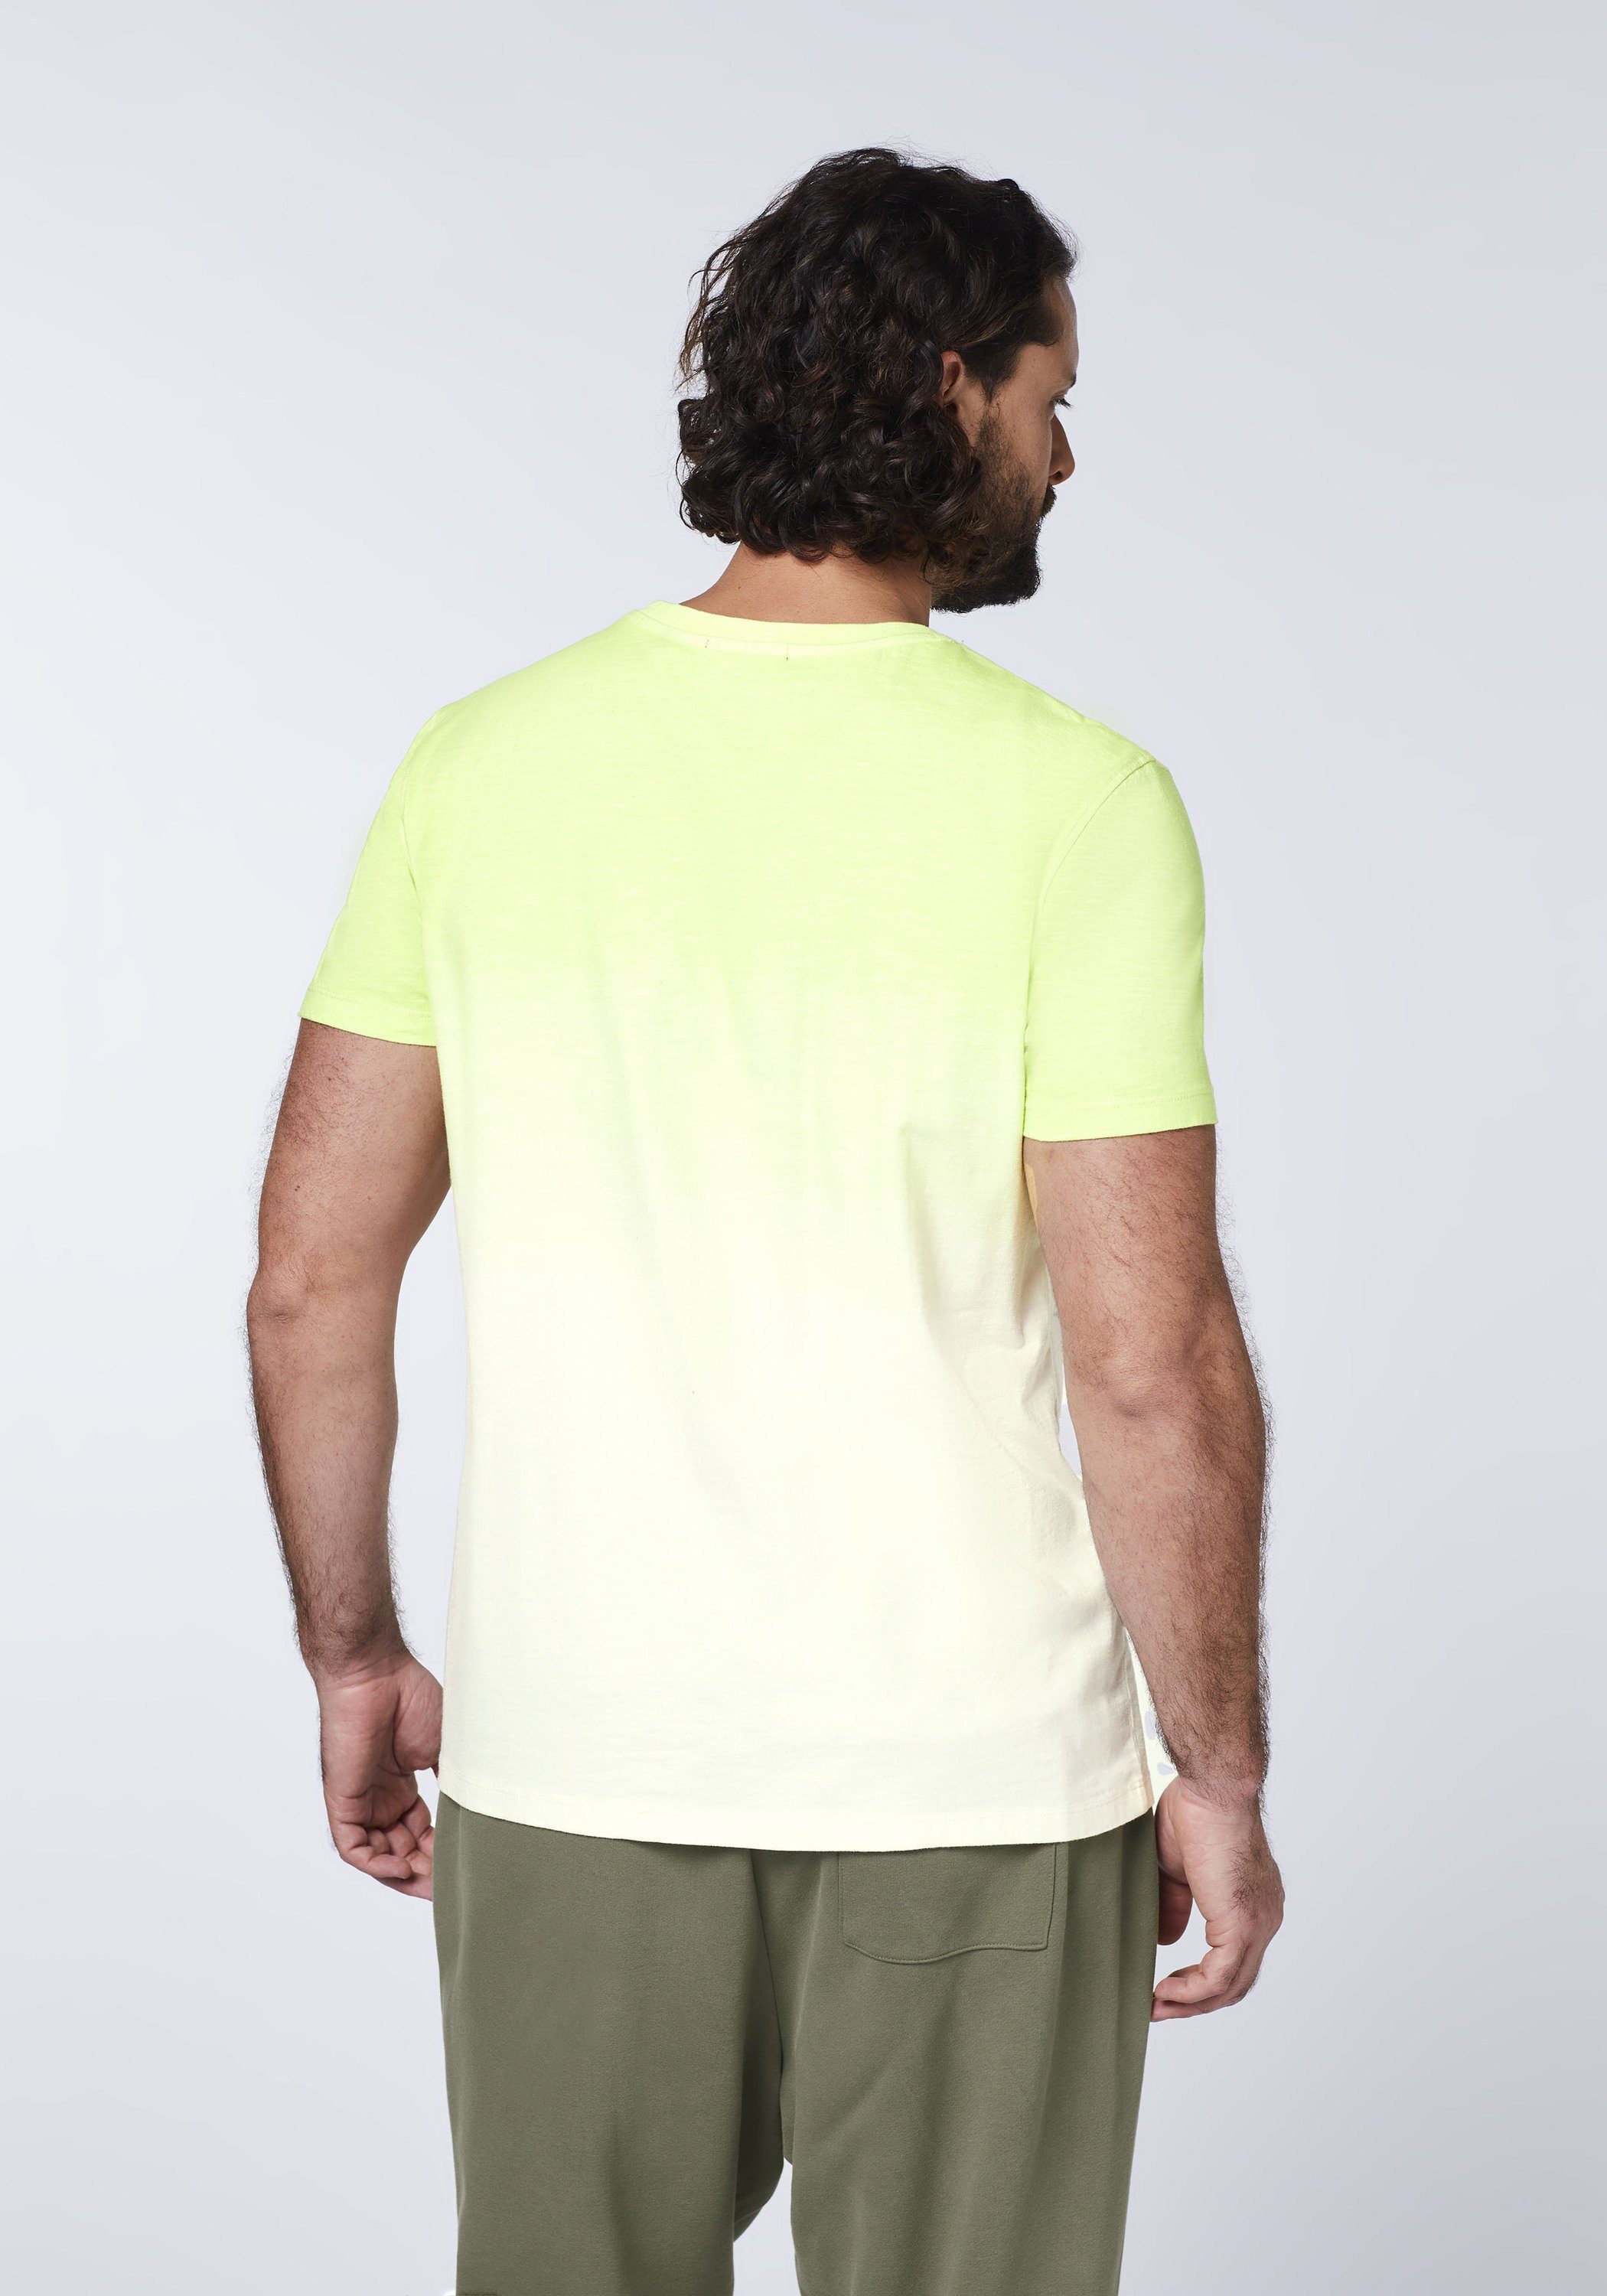 Print-Shirt Slub-Yarn-Textur Chiemsee 6268 1 Green/Dark Green mit im Farbverlauf Light T-Shirt